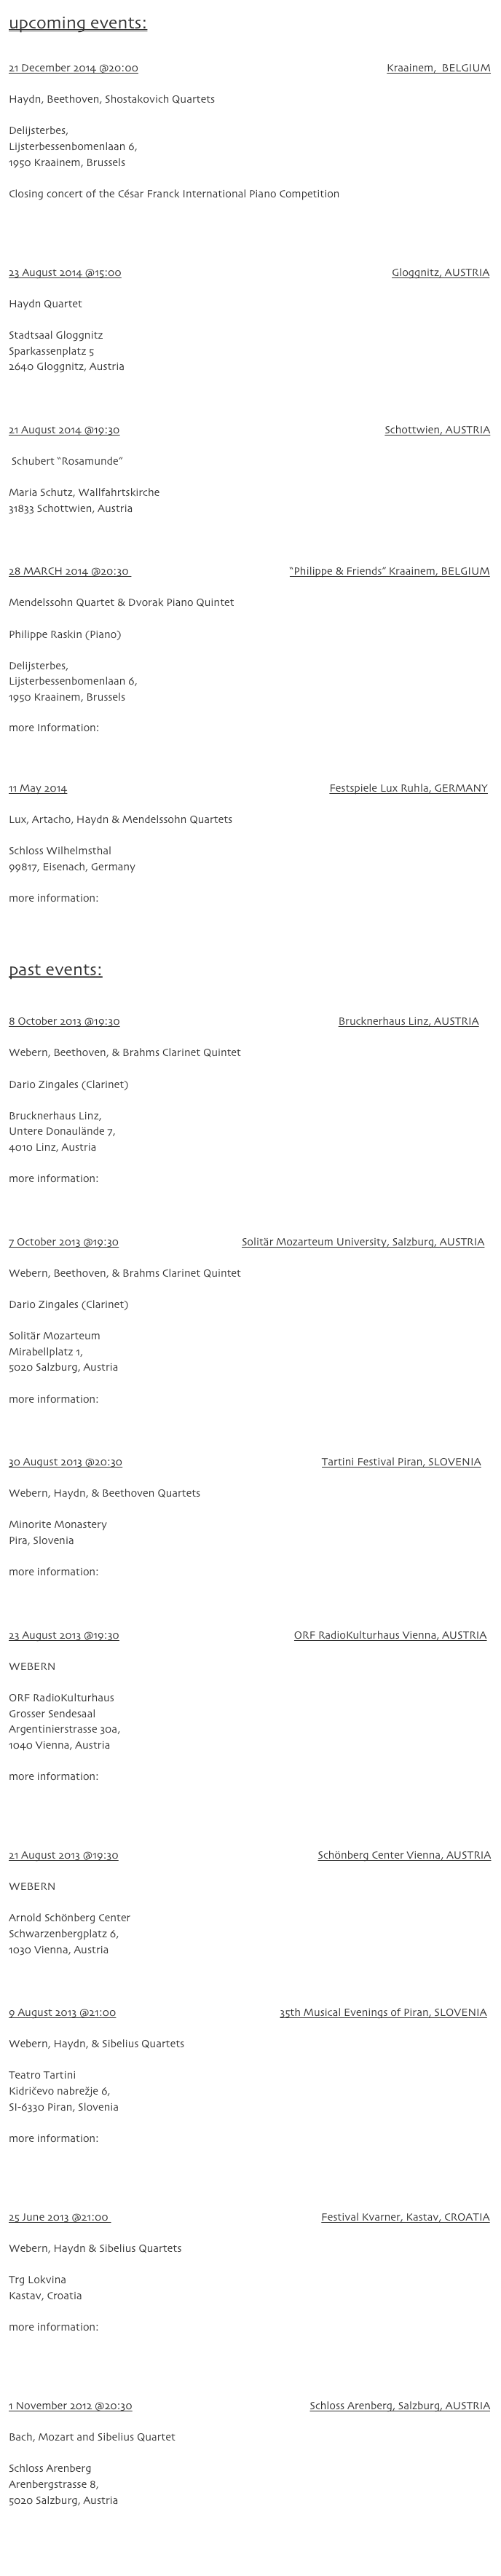 upcoming events:

21 December 2014 @20:00                                                                                           Kraainem,  BELGIUM

Haydn, Beethoven, Shostakovich Quartets

Delijsterbes,
Lijsterbessenbomenlaan 6, 
1950 Kraainem, Brussels

Closing concert of the César Franck International Piano Competition
www.cfipc.com



23 August 2014 @15:00                                                                                                   Gloggnitz, AUSTRIA

Haydn Quartet

Stadtsaal Gloggnitz
Sparkassenplatz 5
2640 Gloggnitz, Austria



21 August 2014 @19:30                                                                                                 Schottwien, AUSTRIA

 Schubert “Rosamunde”

Maria Schutz, Wallfahrtskirche
31833 Schottwien, Austria



28 MARCH 2014 @20:30                                                           “Philippe & Friends” Kraainem, BELGIUM

Mendelssohn Quartet & Dvorak Piano Quintet

Philippe Raskin (Piano)

Delijsterbes,
Lijsterbessenbomenlaan 6, 
1950 Kraainem, Brussels

more Information: www.philipperaskin.com



11 May 2014                                                                                                Festspiele Lux Ruhla, GERMANY

Lux, Artacho, Haydn & Mendelssohn Quartets

Schloss Wilhelmsthal
99817, Eisenach, Germany

more information: www.lux-festspiele.de


past events:


8 October 2013 @19:30                                                                                Brucknerhaus Linz, AUSTRIA

Webern, Beethoven, & Brahms Clarinet Quintet

Dario Zingales (Clarinet)

Brucknerhaus Linz,
Untere Donaulände 7,
4010 Linz, Austria

more information: www.brucknerhaus.at/www1/de/detail.php?id=7453



7 October 2013 @19:30                                             Solitär Mozarteum University, Salzburg, AUSTRIA

Webern, Beethoven, & Brahms Clarinet Quintet

Dario Zingales (Clarinet)

Solitär Mozarteum
Mirabellplatz 1, 
5020 Salzburg, Austria

more information: www.moz.ac.at/de/events/veranstaltung.php?vanr=12826



30 August 2013 @20:30                                                                         Tartini Festival Piran, SLOVENIA

Webern, Haydn, & Beethoven Quartets

Minorite Monastery
Pira, Slovenia

more information: http://www.tartinifestival.org



23 August 2013 @19:30                                                                ORF RadioKulturhaus Vienna, AUSTRIA

WEBERN

ORF RadioKulturhaus
Grosser Sendesaal
Argentinierstrasse 30a,
1040 Vienna, Austria

more information: www.mdw.ac.at/upload/MDWeb/isa_neu/downloads/Programm-23.August%20-%20RadioKulturhaus.pdf



21 August 2013 @19:30                                                                         Schönberg Center Vienna, AUSTRIA

WEBERN

Arnold Schönberg Center
Schwarzenbergplatz 6,
1030 Vienna, Austria



9 August 2013 @21:00                                                            35th Musical Evenings of Piran, SLOVENIA

Webern, Haydn, & Sibelius Quartets

Teatro Tartini
Kidričevo nabrežje 6,
SI-6330 Piran, Slovenia

more information: www.avditorij.si/si/prireditev/35-piranski-glasbeni-veceri-young-virtuosi-in-concert-testore-quartet#!prettyPhoto



25 June 2013 @21:00                                                                              Festival Kvarner, Kastav, CROATIA

Webern, Haydn & Sibelius Quartets

Trg Lokvina
Kastav, Croatia

more information: www.festivalkvarner.com/language/en-us/service/aktuell/aktuelldetail/newsid/243



1 November 2012 @20:30                                                                 Schloss Arenberg, Salzburg, AUSTRIA                                     

Bach, Mozart and Sibelius Quartet

Schloss Arenberg
Arenbergstrasse 8,
5020 Salzburg, Austria



